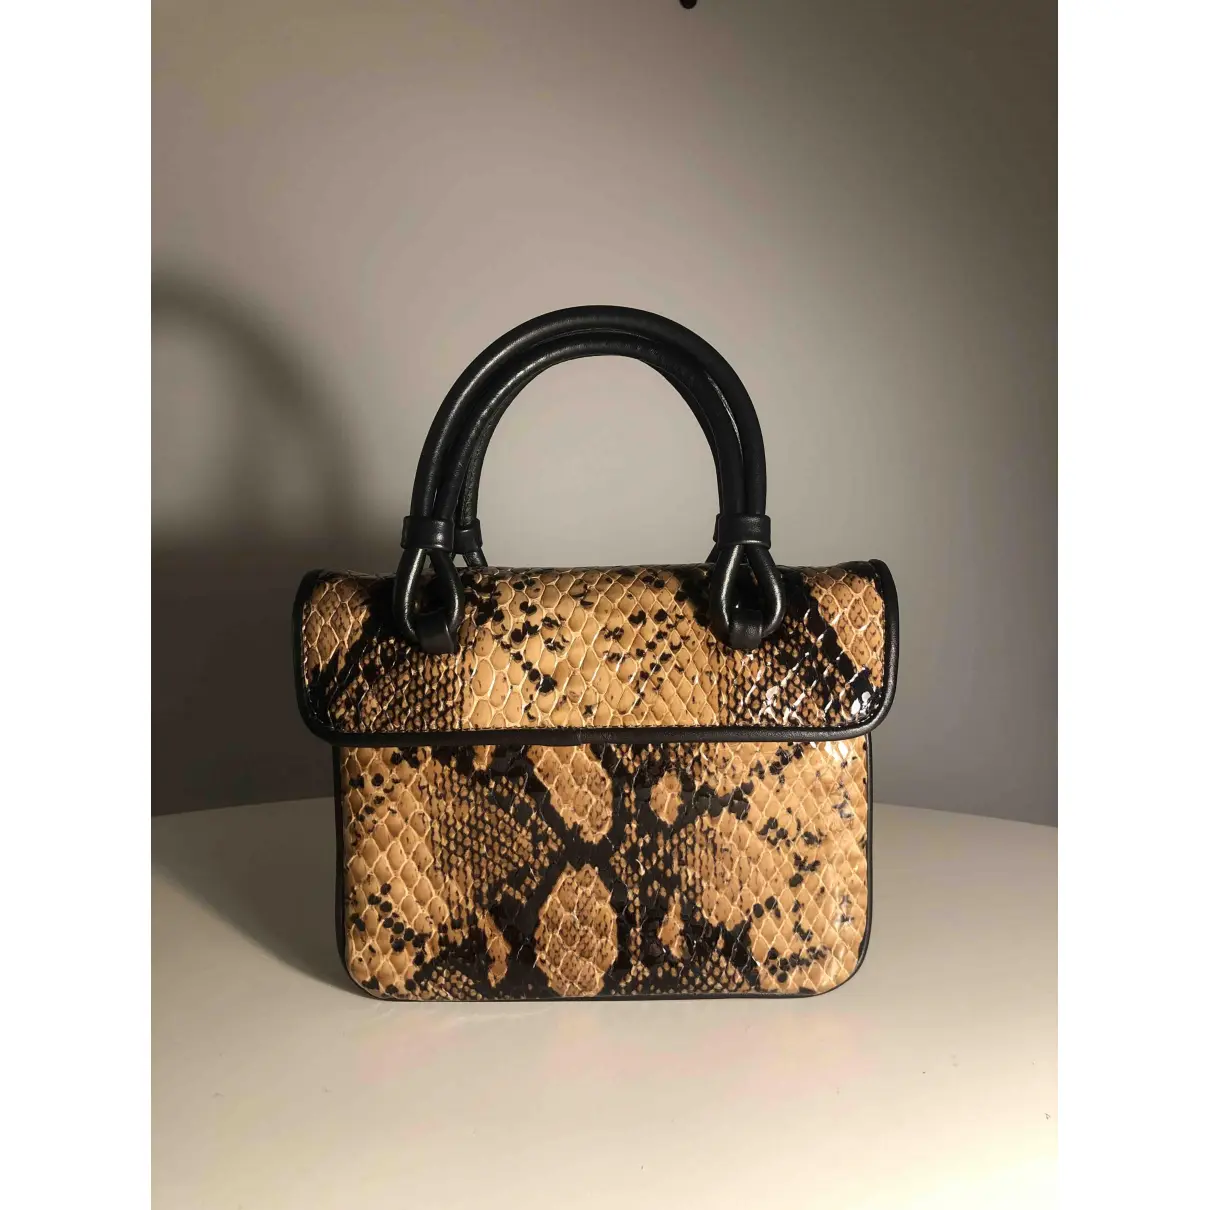 Buy Maryam Nassir Zadeh Leather handbag online